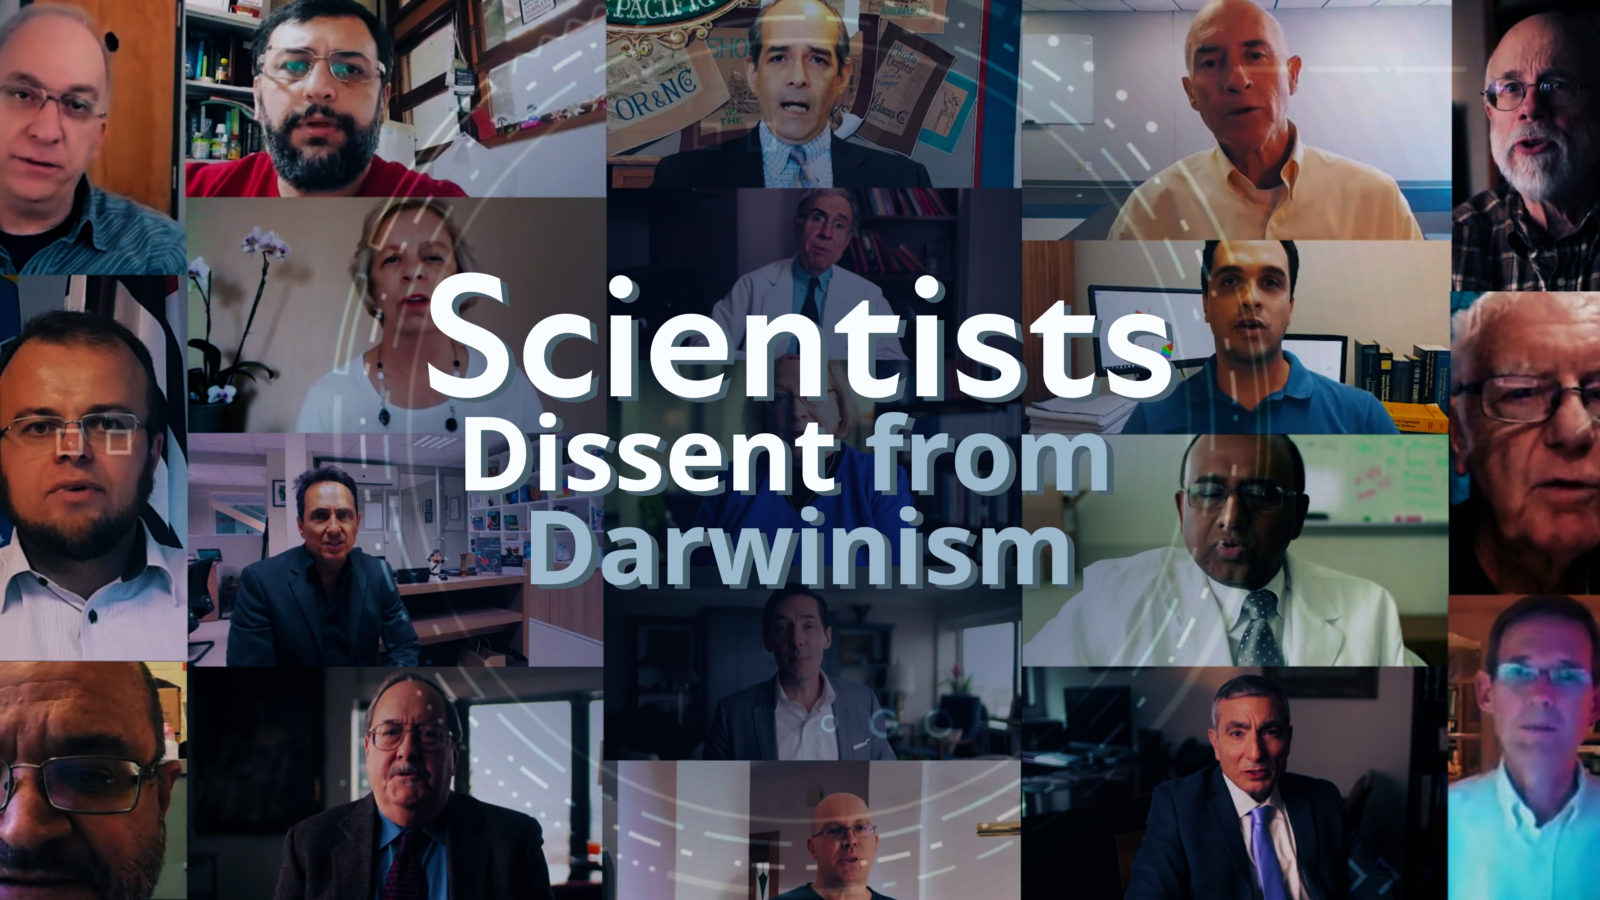 The Deniable Darwin by Berlinski, David